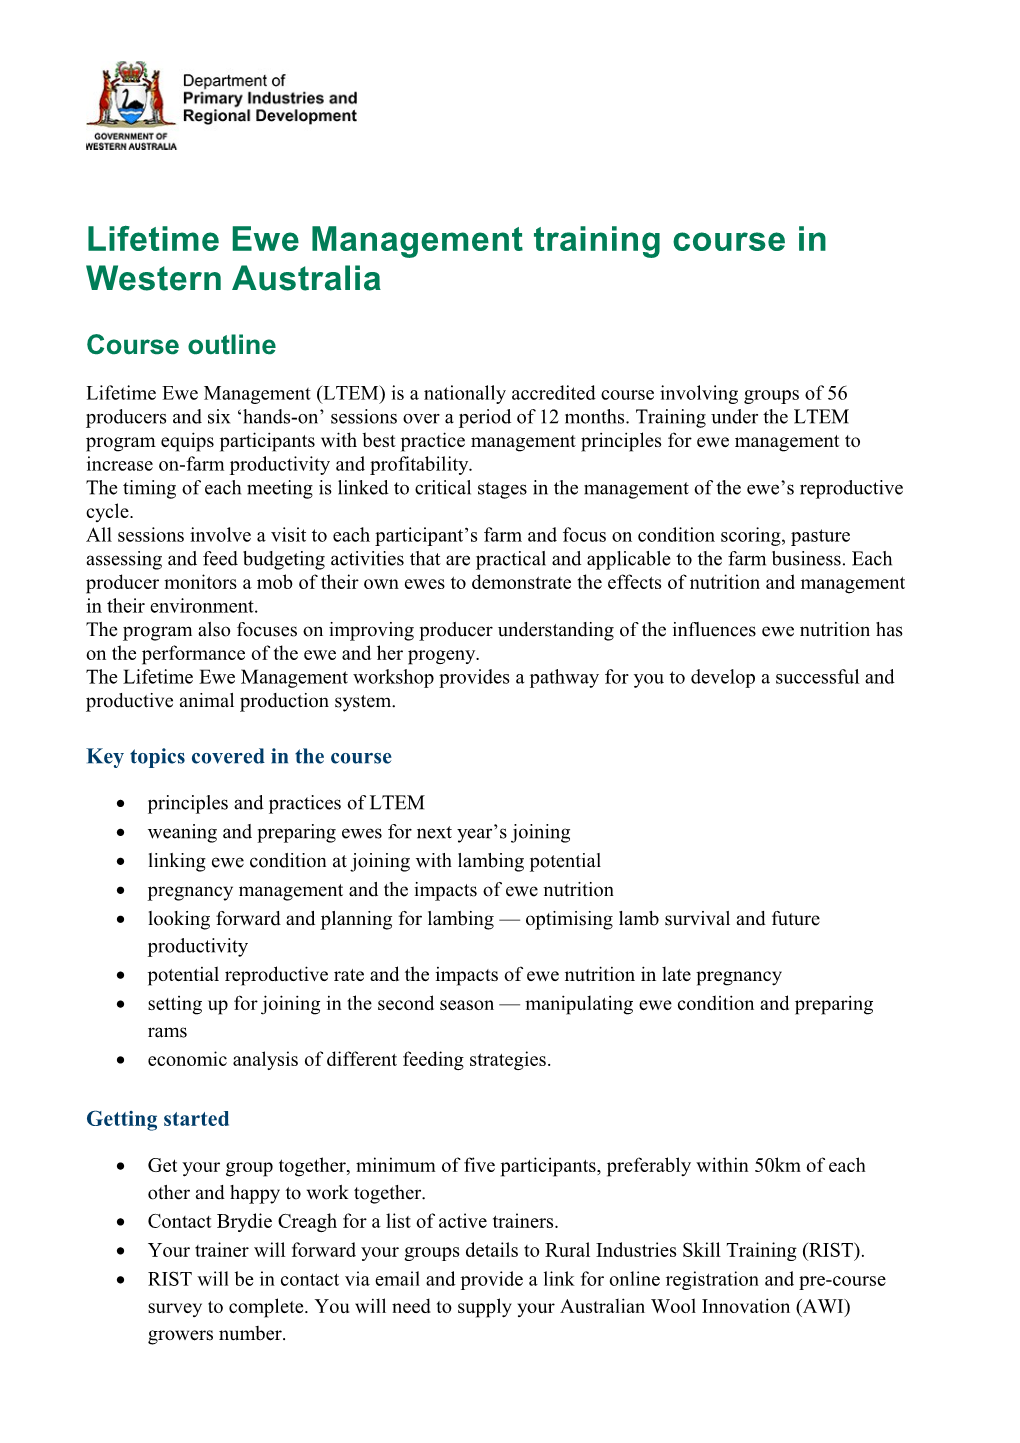 Lifetime Ewe Management Training Course in Western Australia